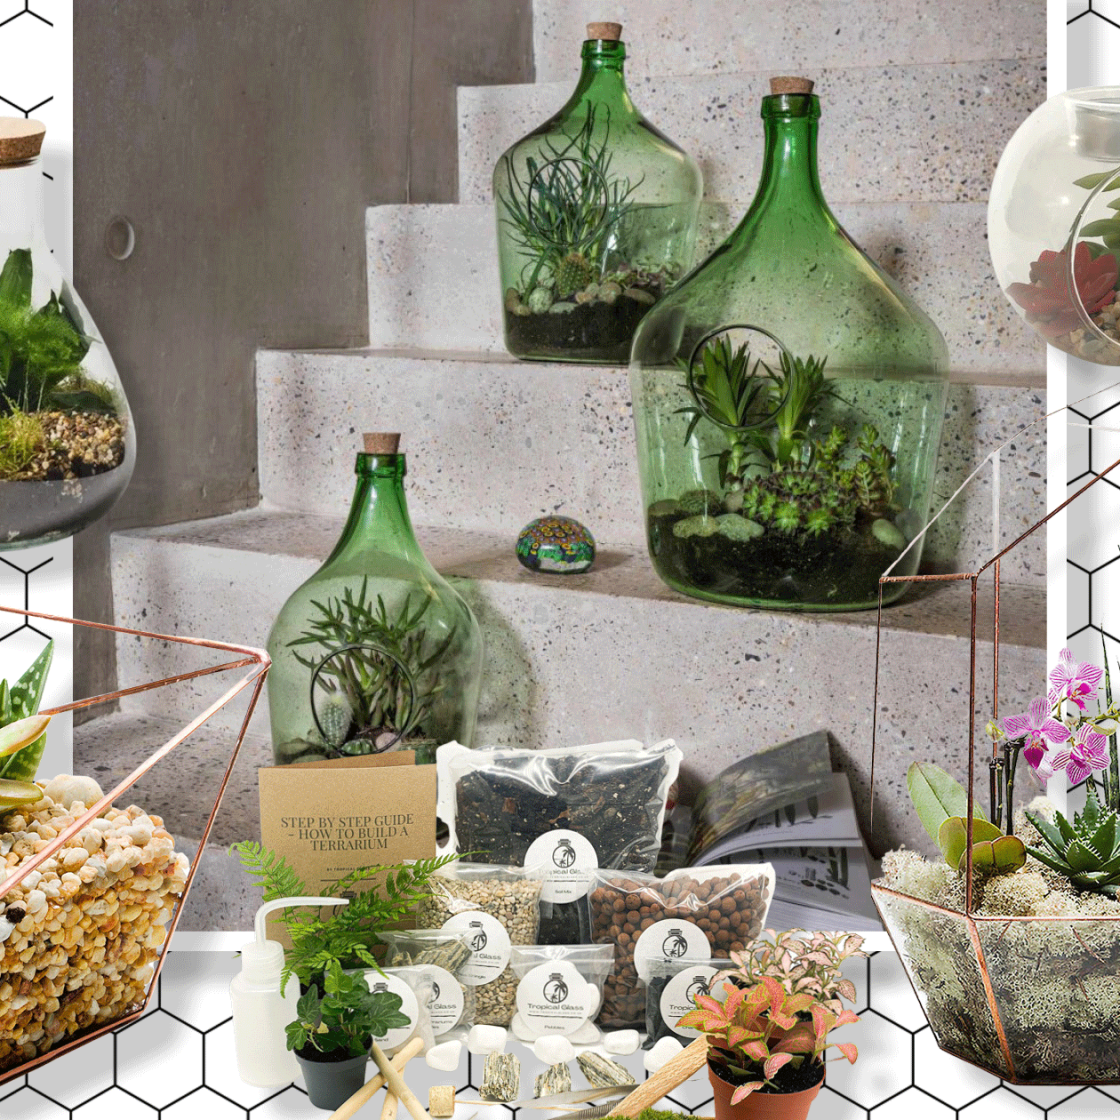 DIY Large Terrarium Kit Build Your Own Ecosystem Indoor Garden